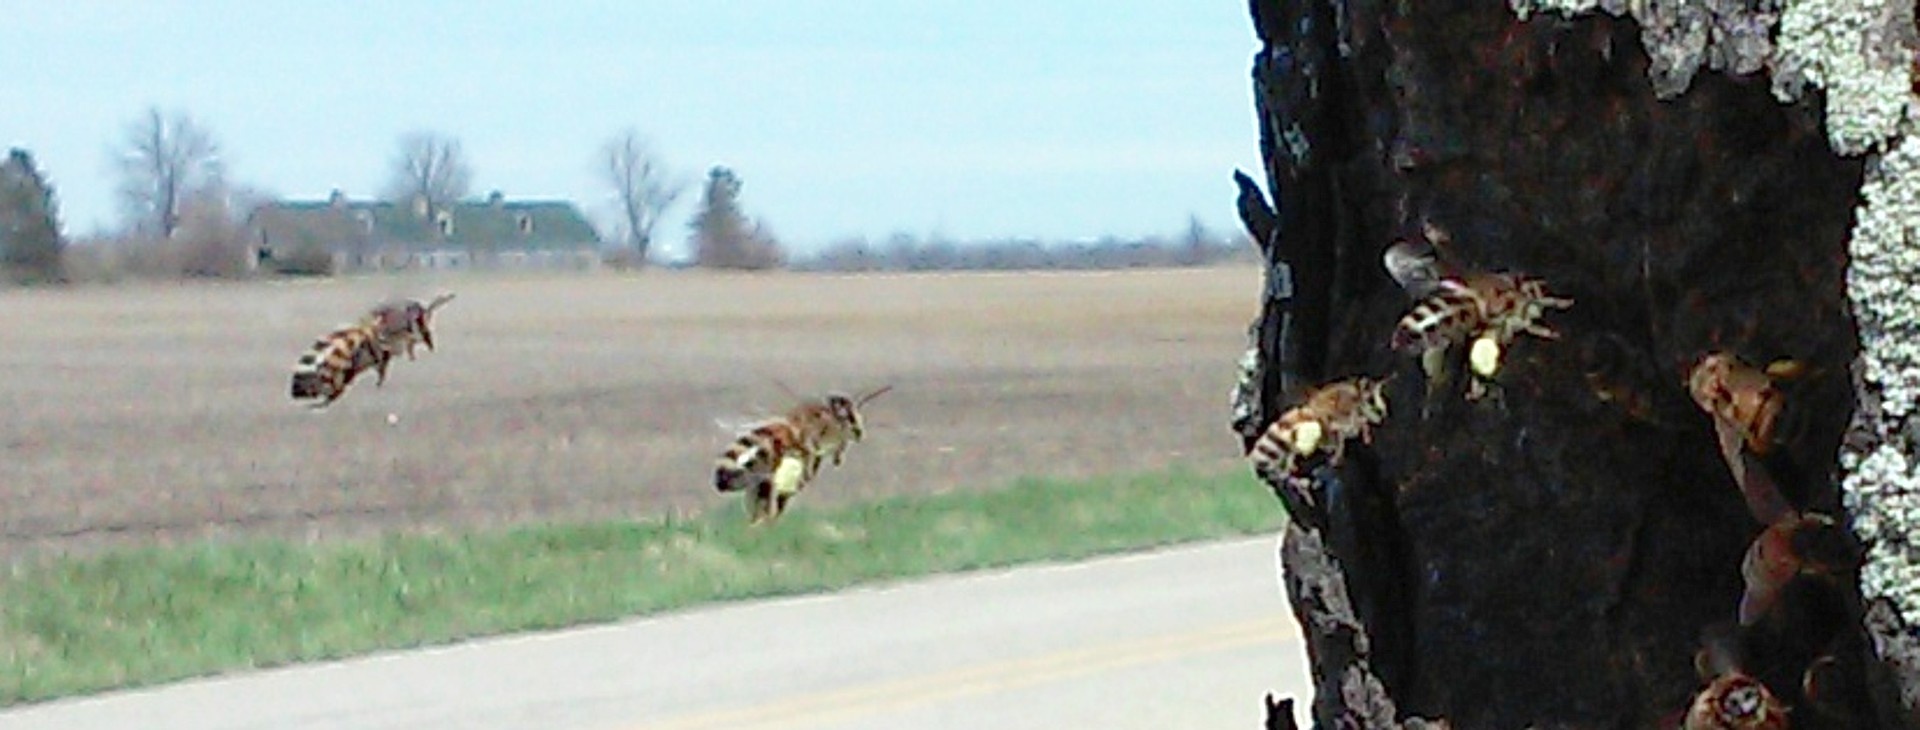 bees wild nature free photo